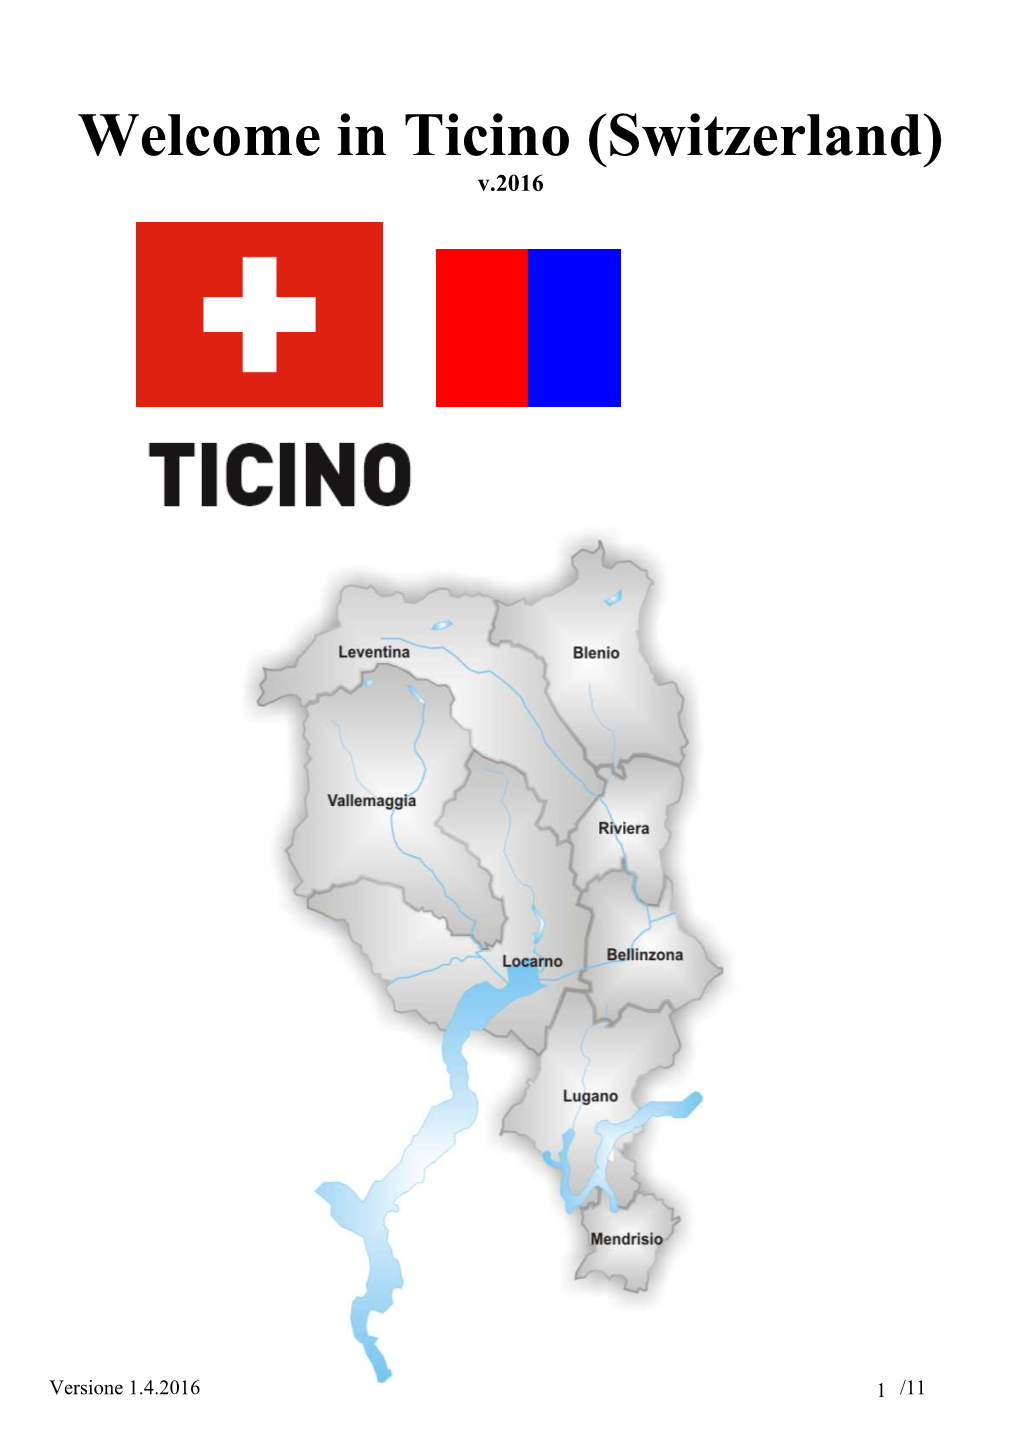 In Ticino (Switzerland) V.2016